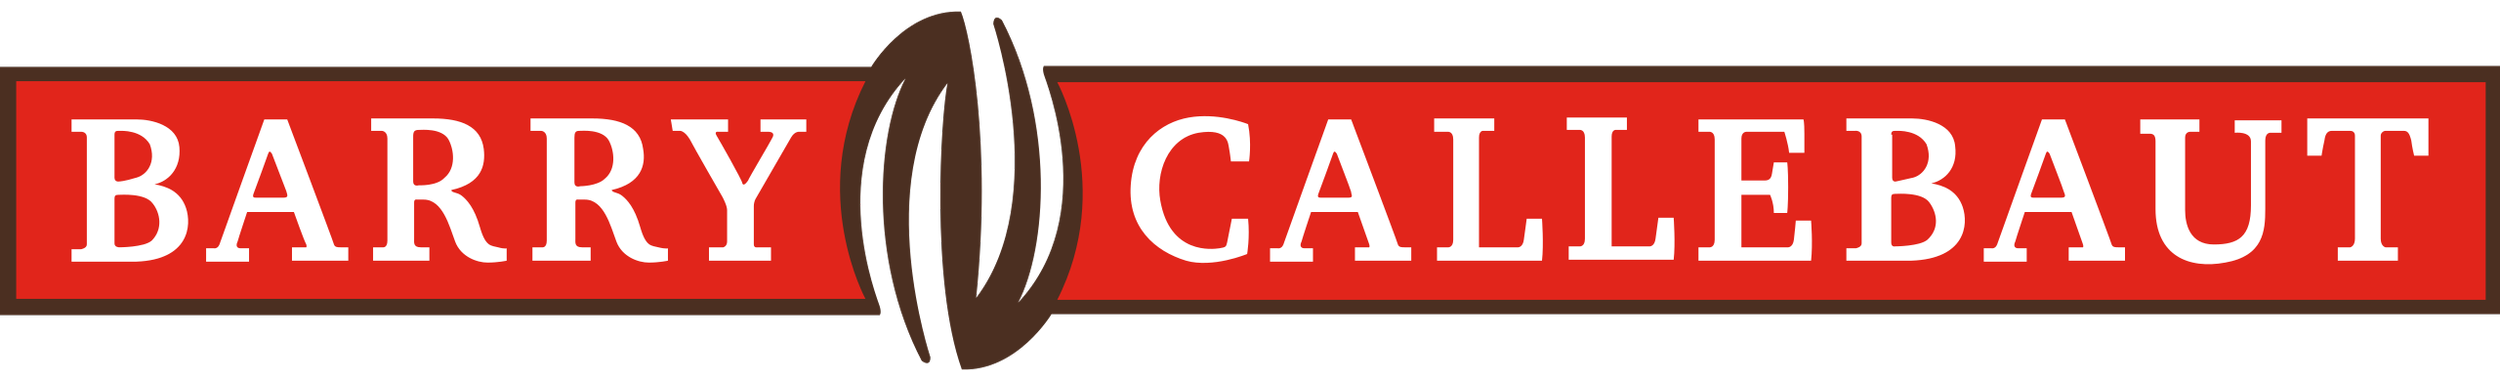 Barry_Callebaut_logo.svg.png